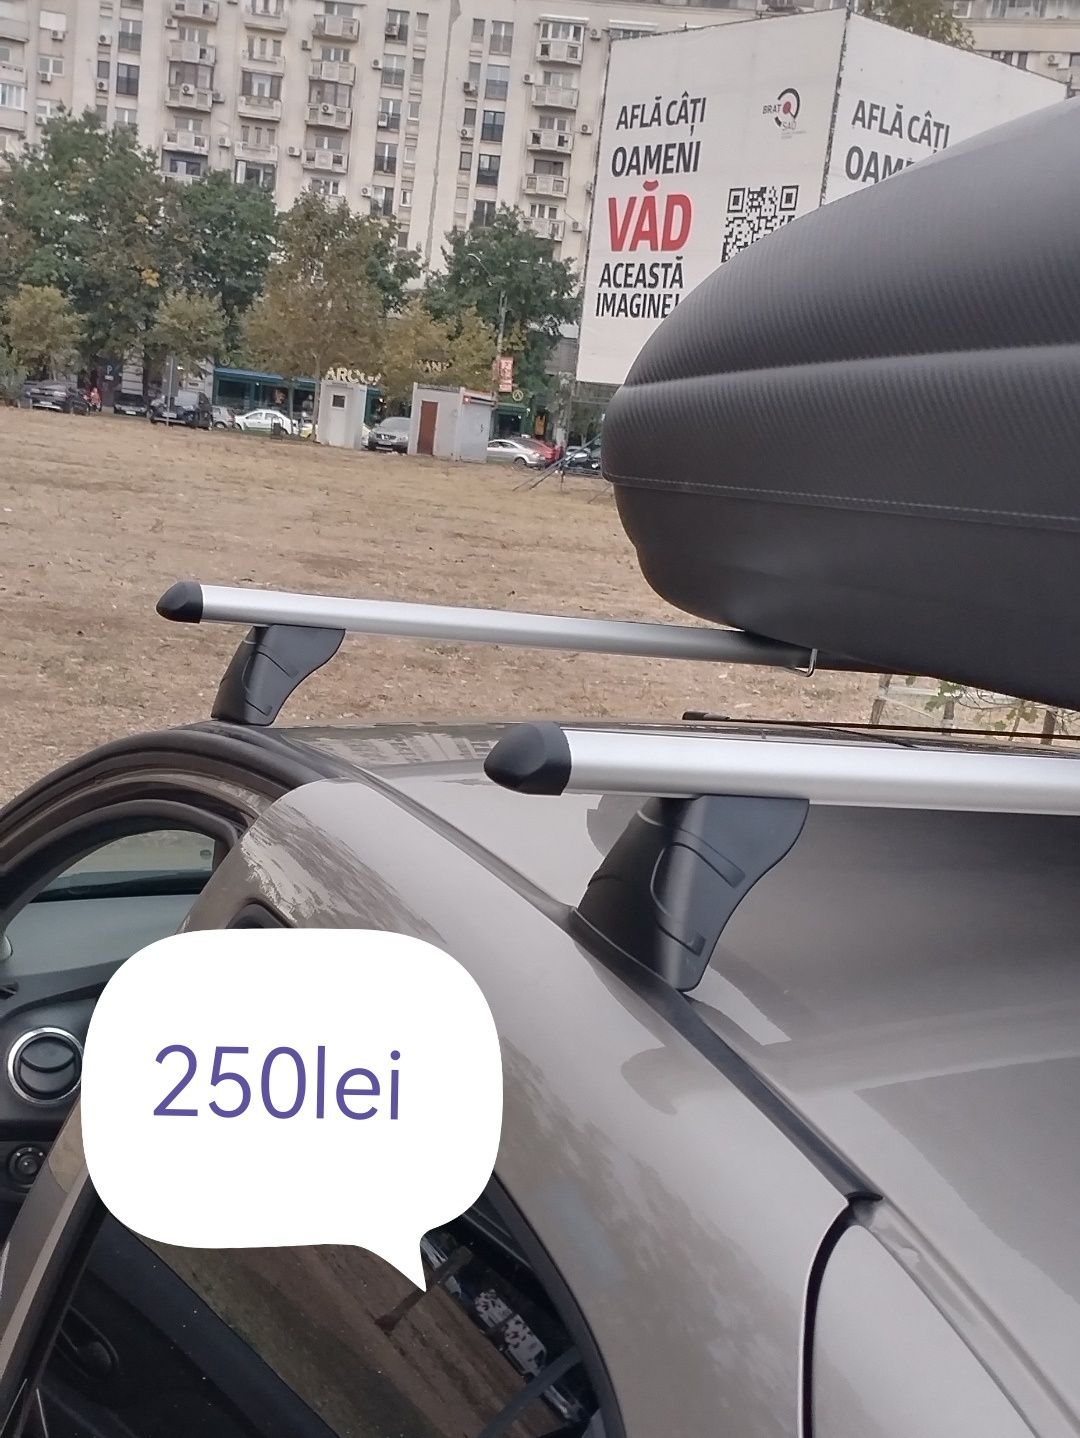 Bare de portbagaj transversale Dacia Logan Sandero 1 2 otel aluminiu
L